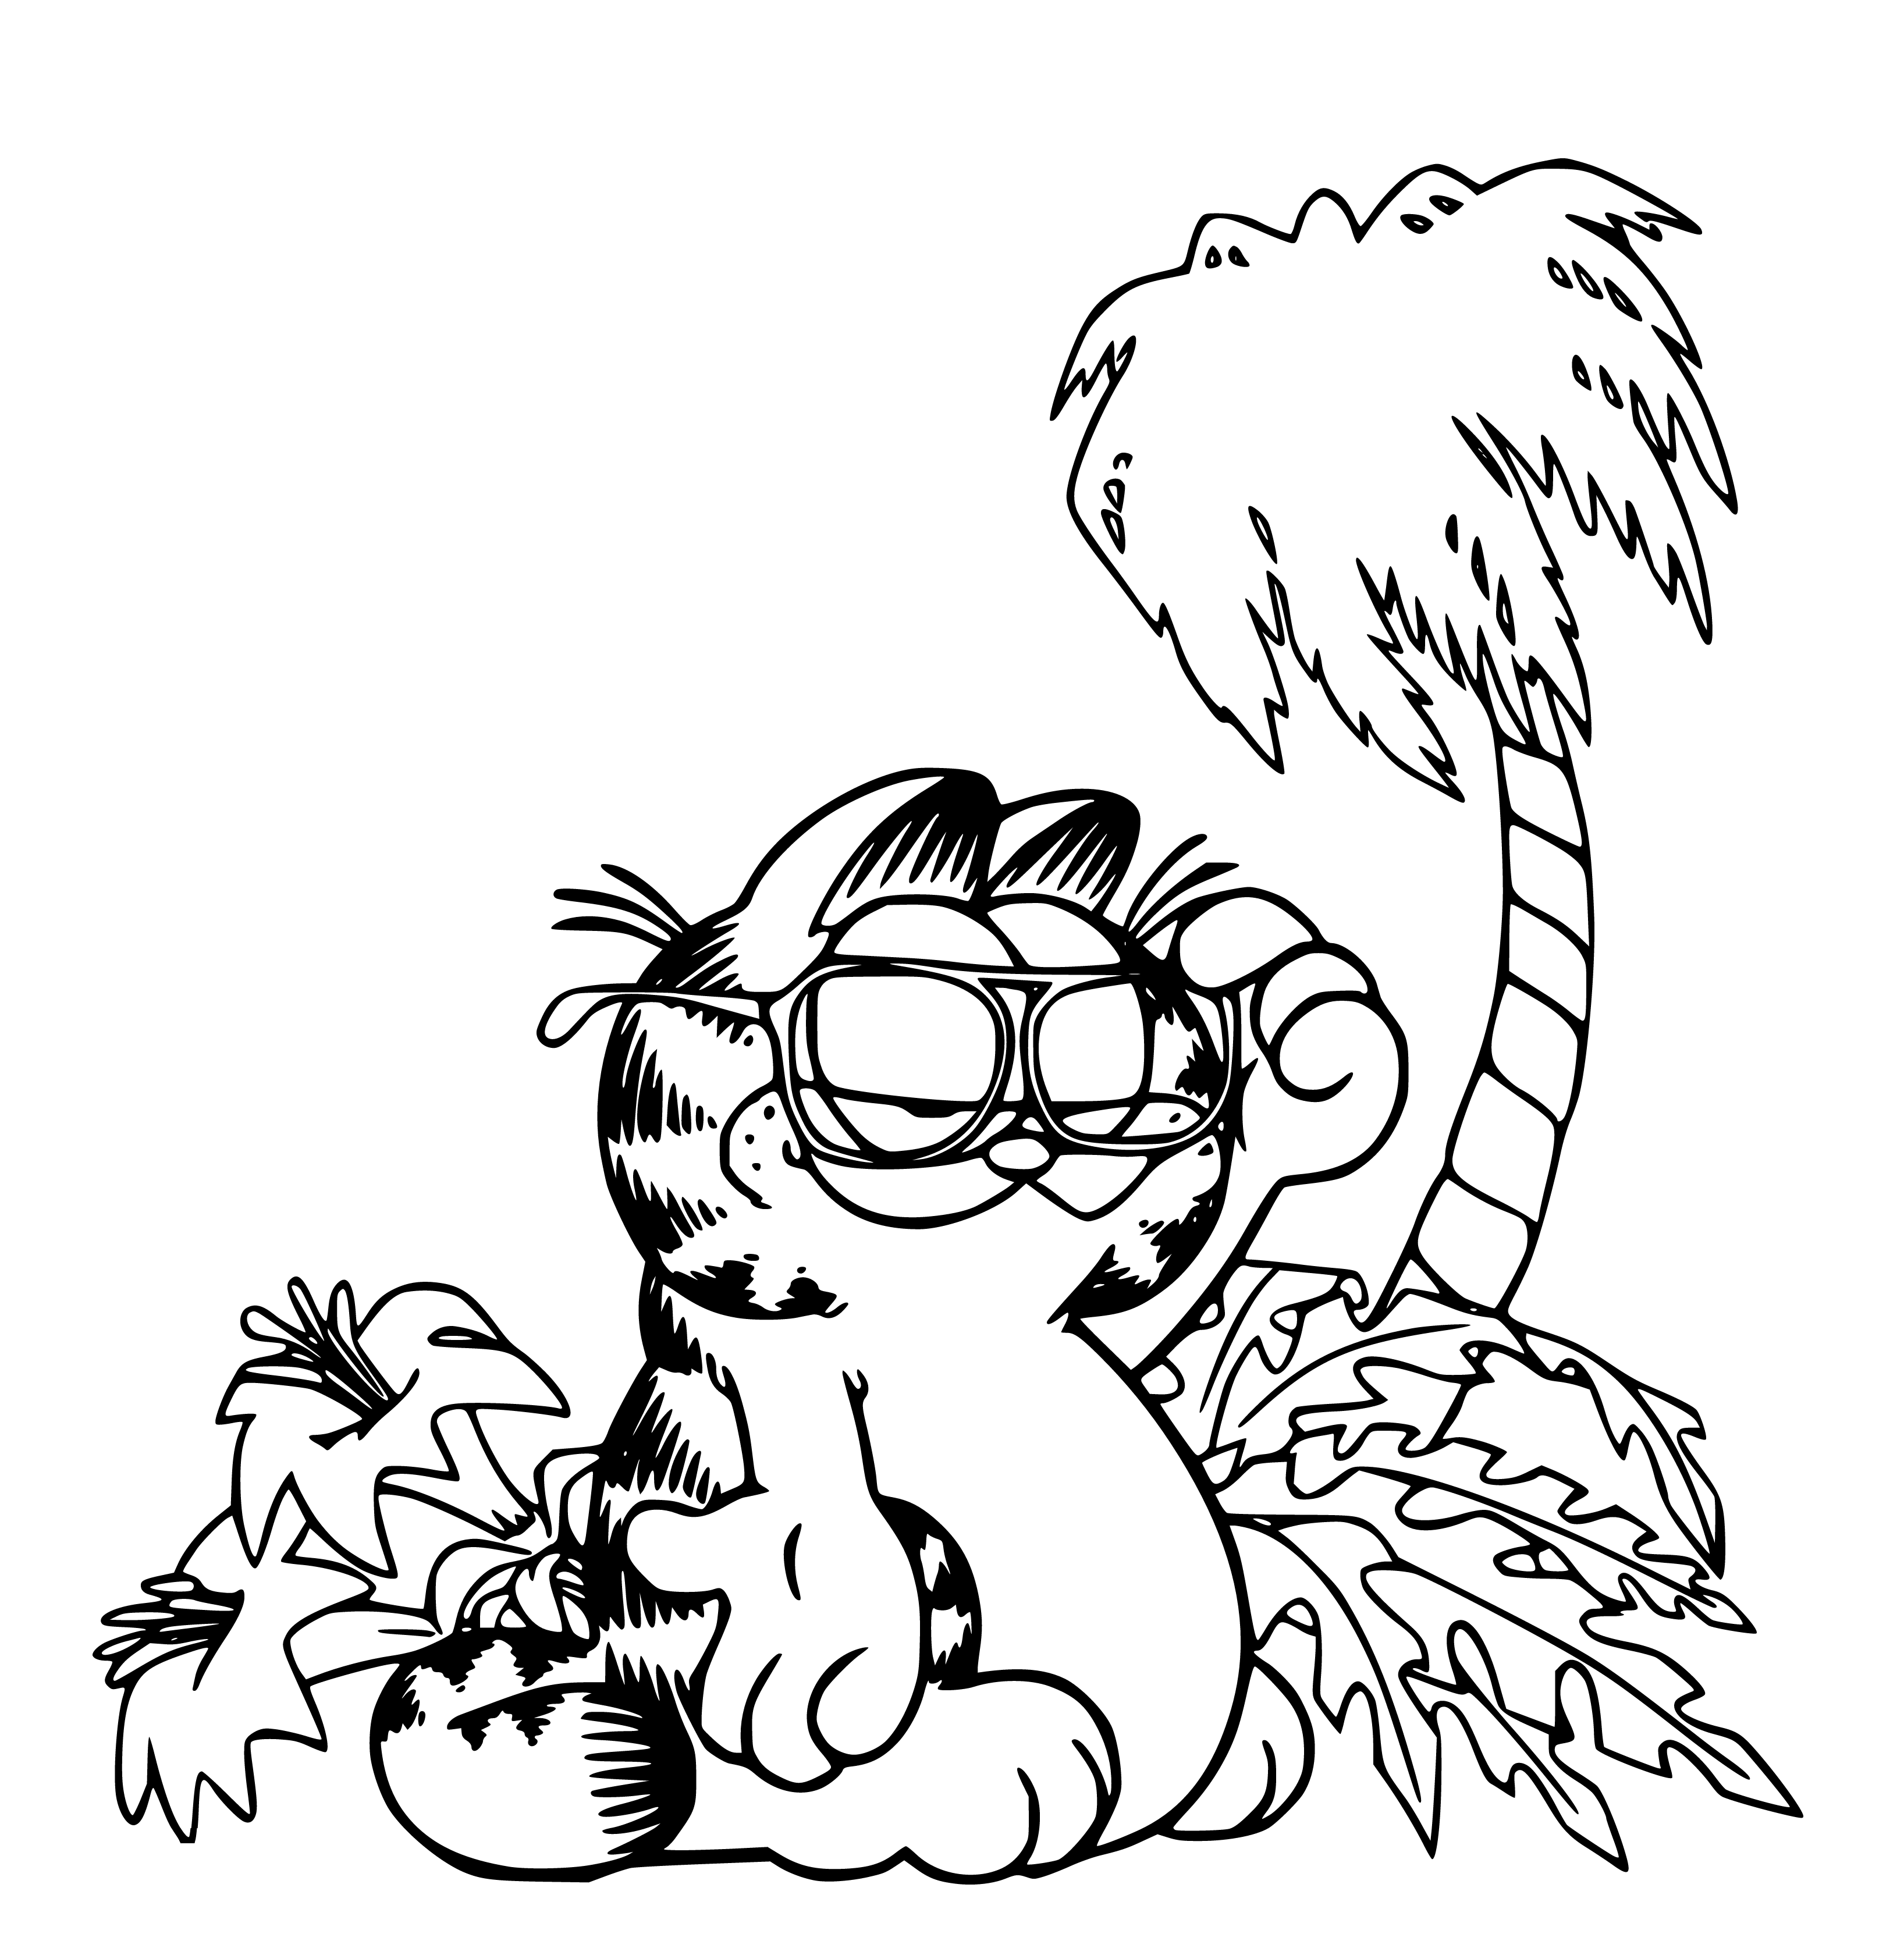 Garfield Holiday Coloring Page - SheetalColor.com